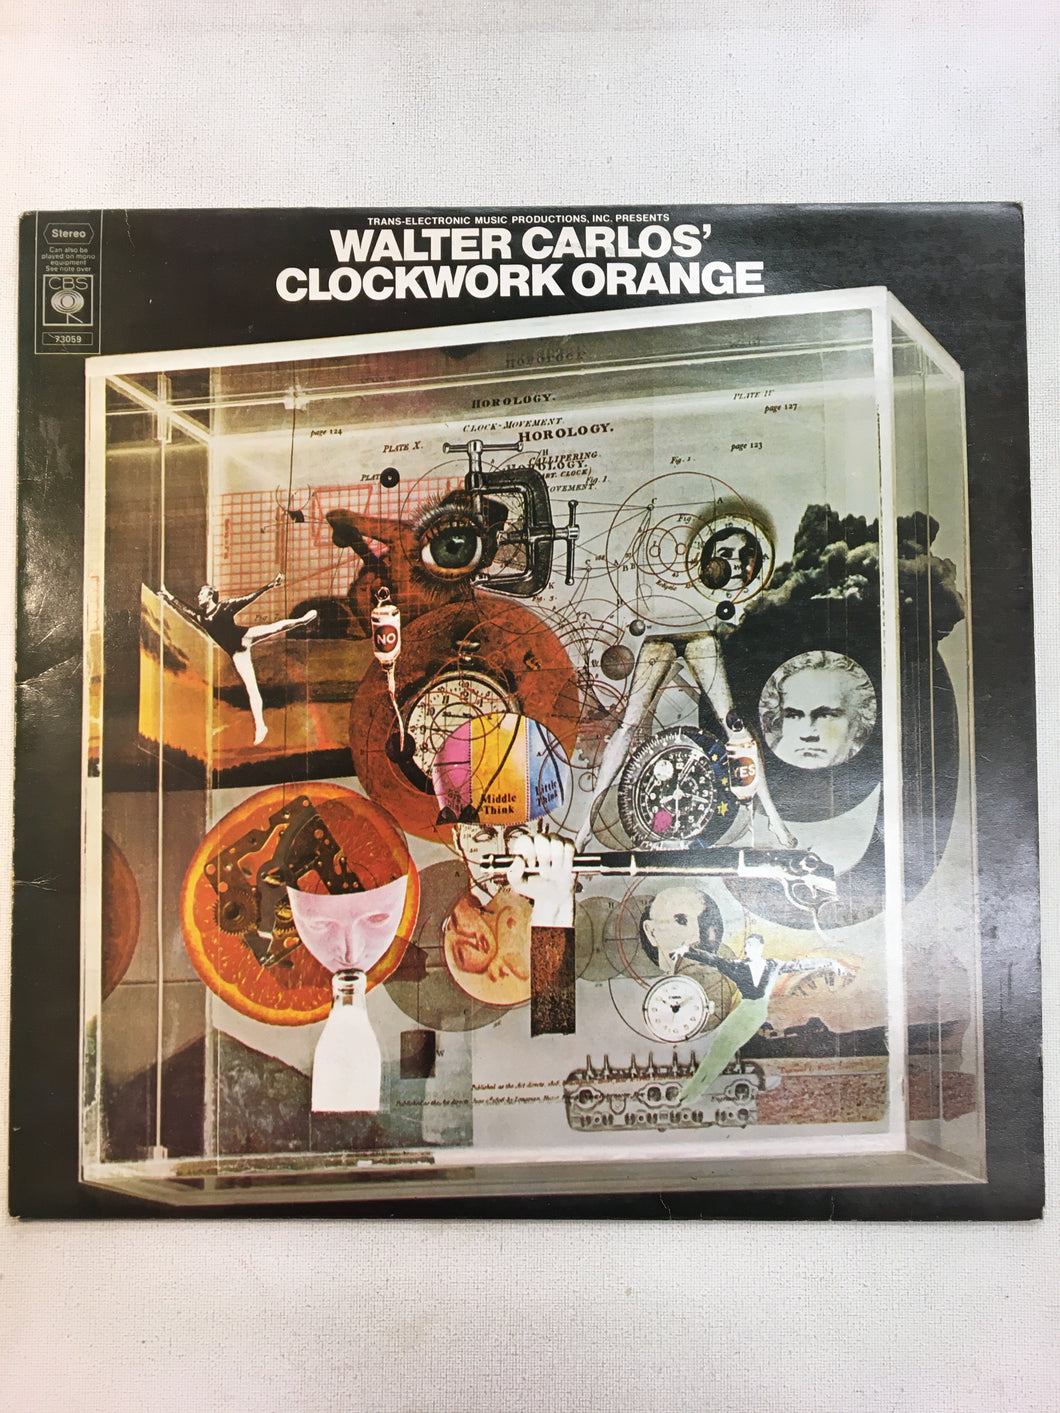 WALTER CARLOS’ CLOCKWORK ORANGE LP